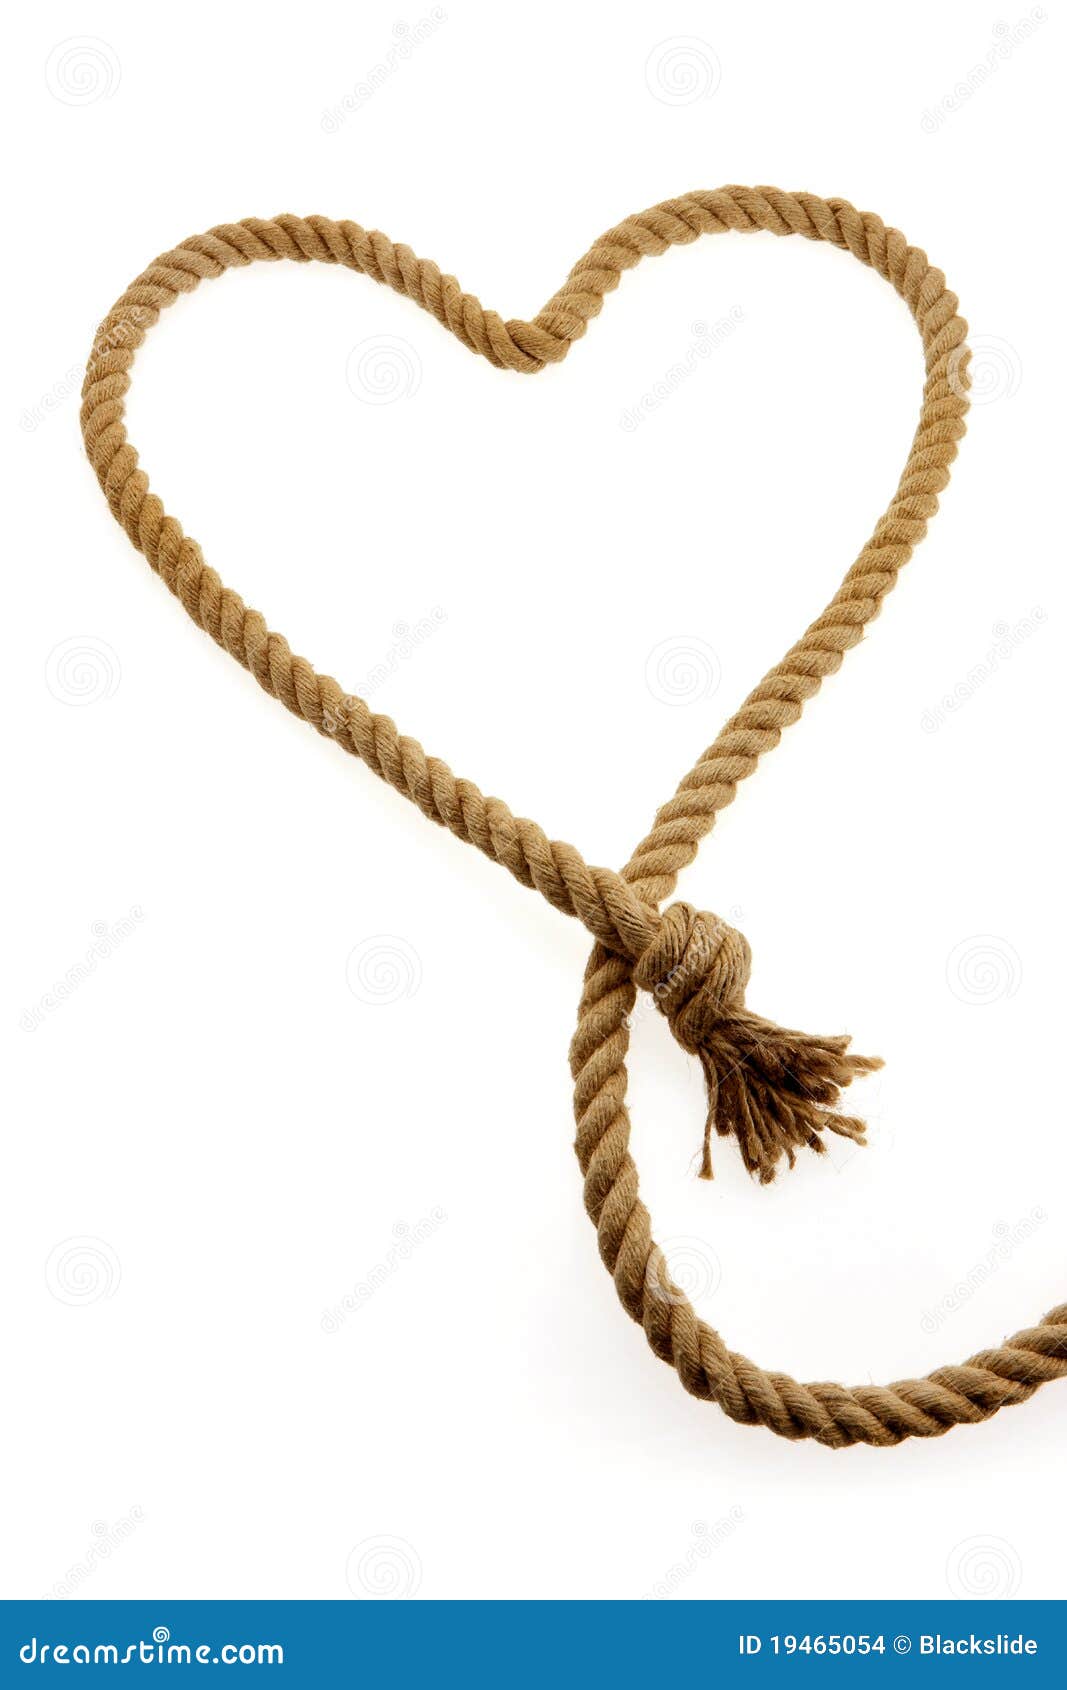 clipart heart knot - photo #21